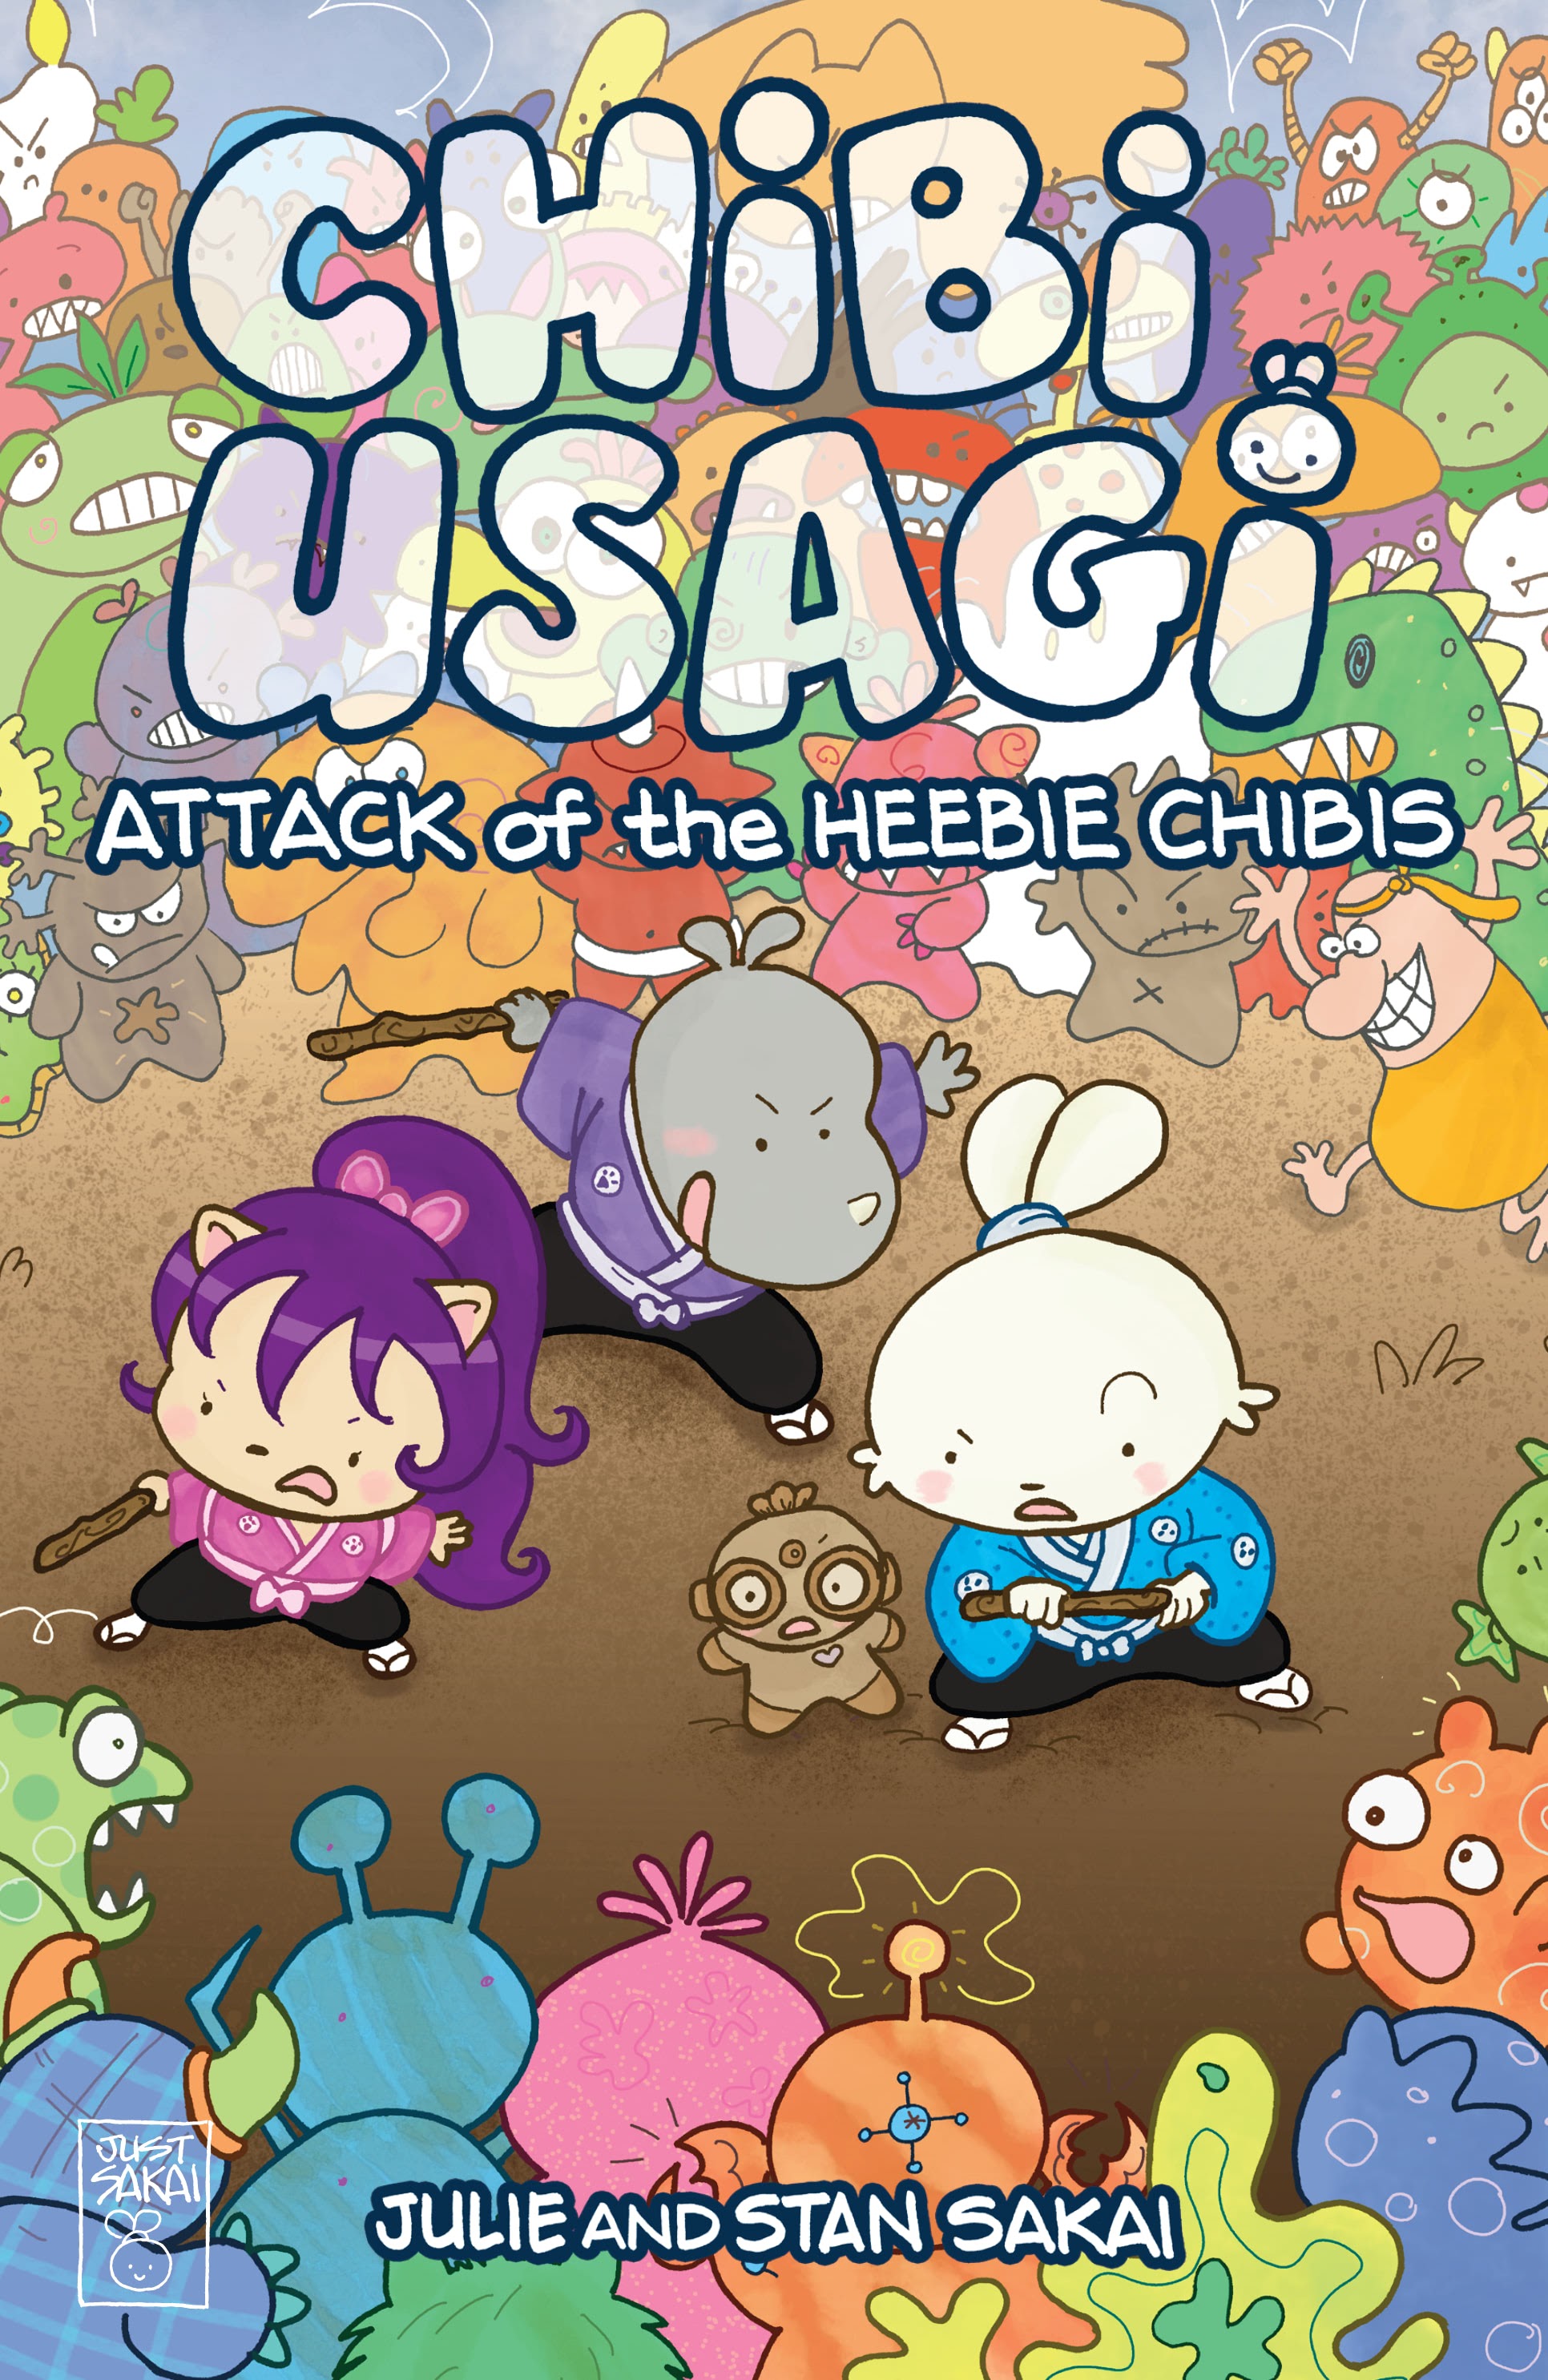 Read online Chibi-Usagi: Attack of the Heebie Chibis comic -  Issue # TPB - 1